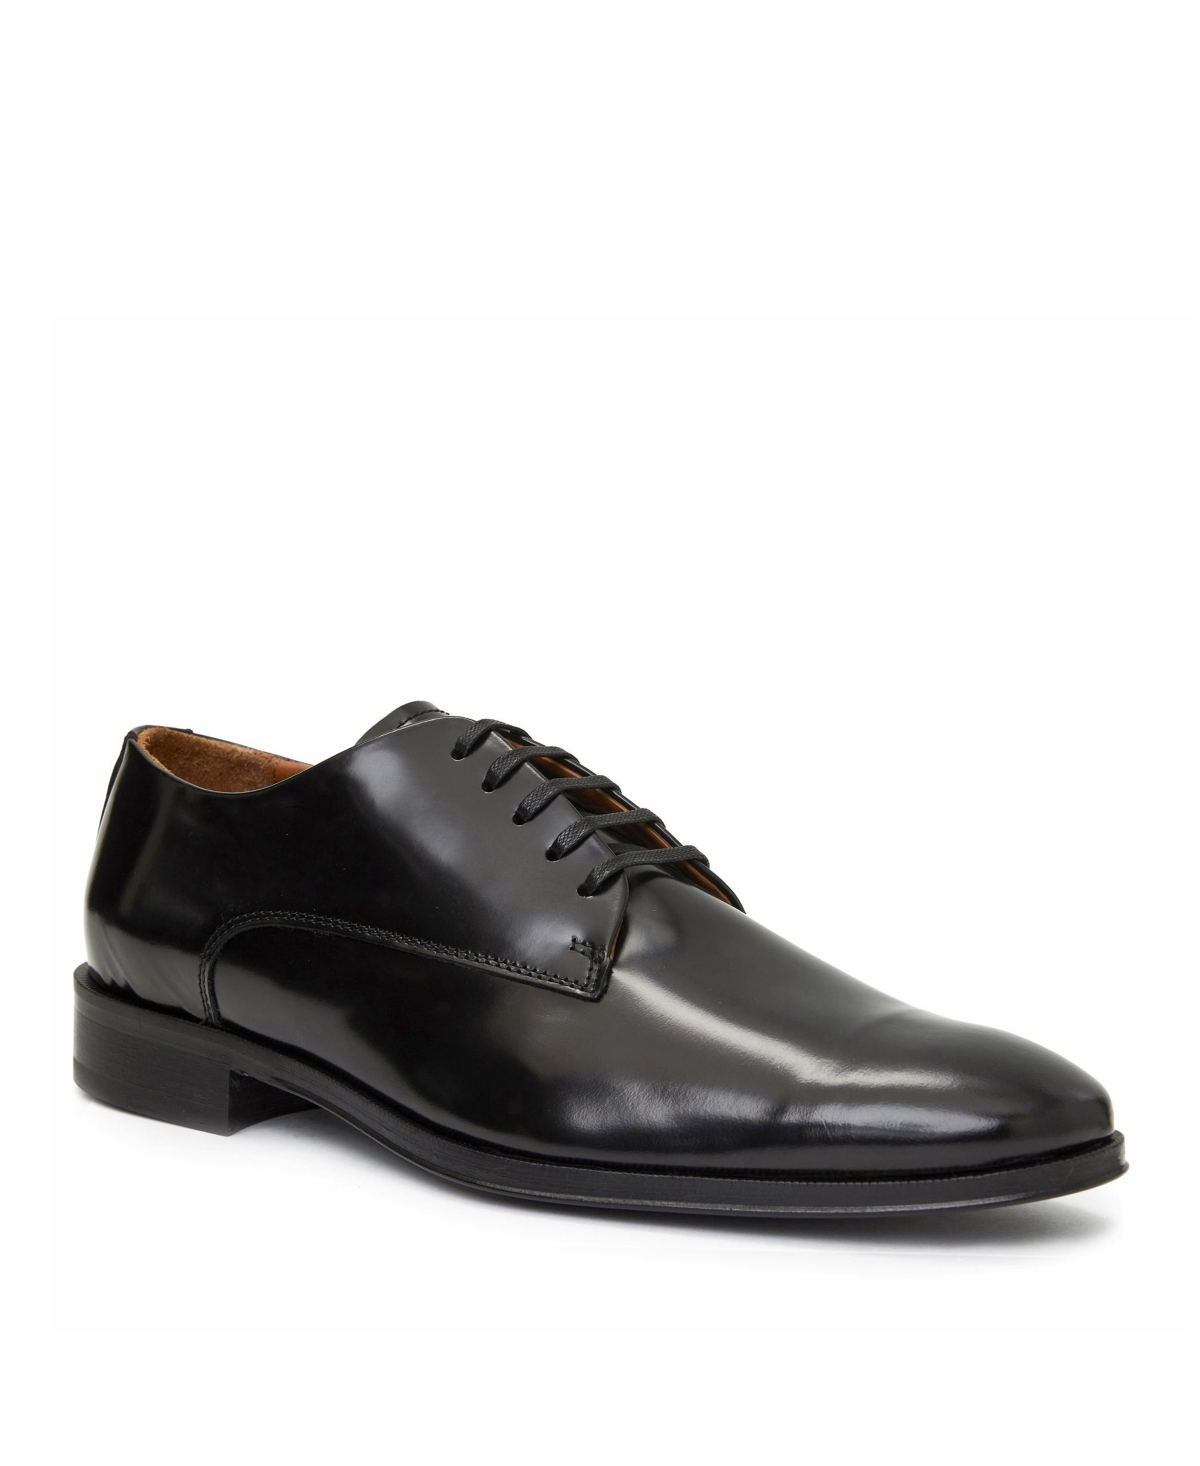 Men's Metti Leather Oxford Dress Shoes - Black